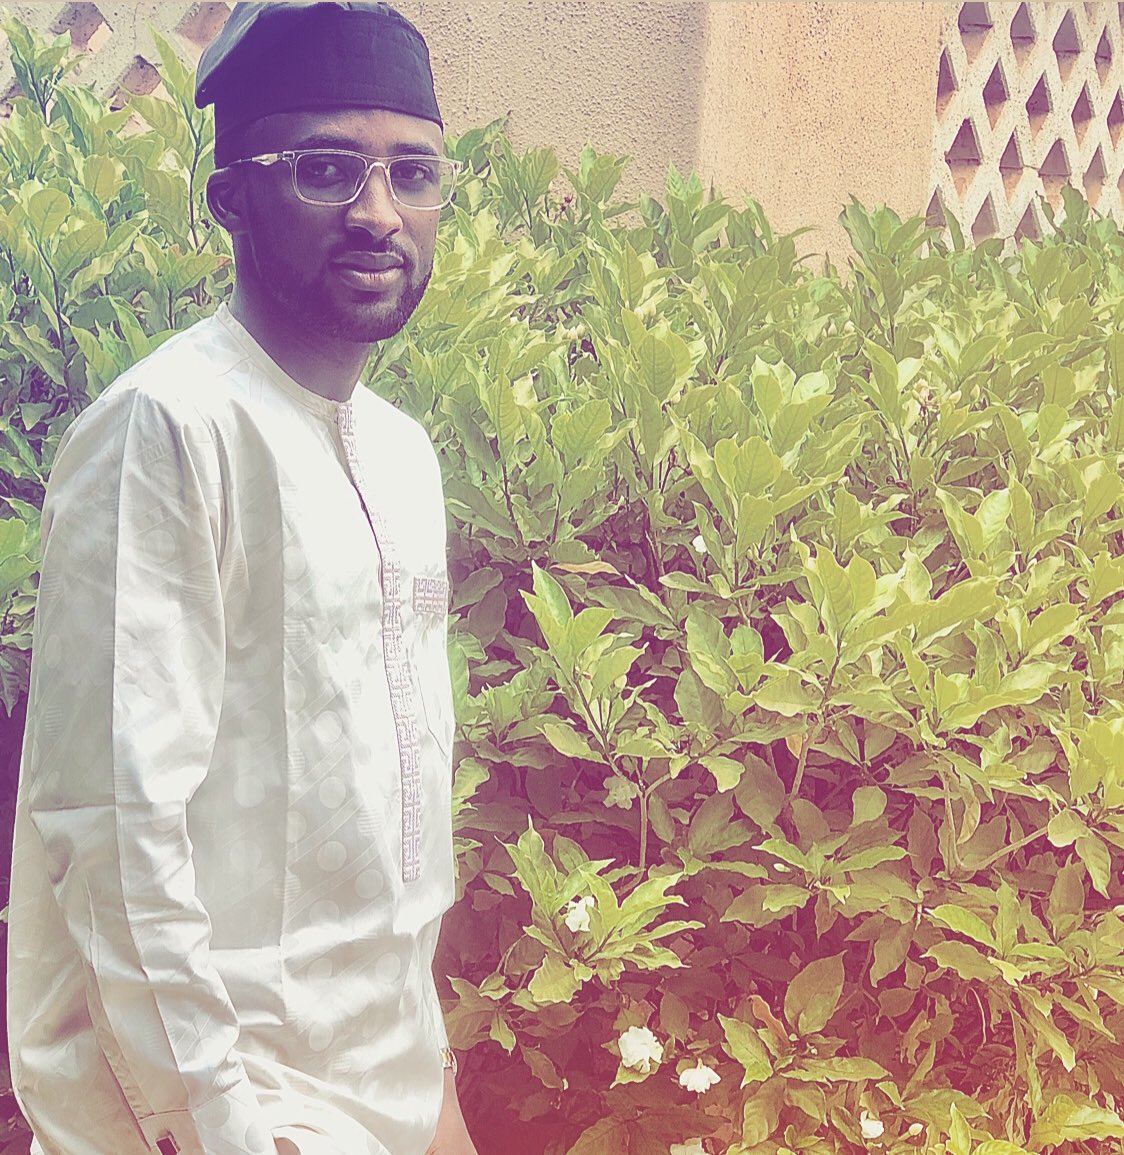 Emilokan! Yoruba version of Me..
Happy Eid Adha 🕌